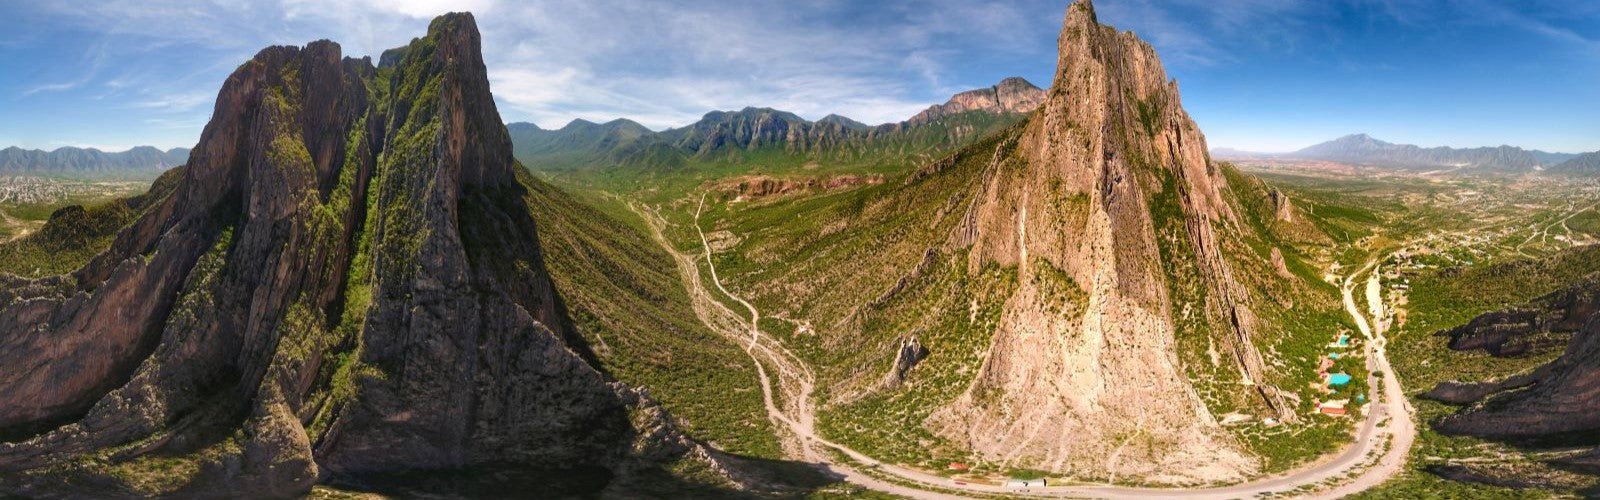 The Rock Climbing Guide to Potrero Chico, Mexico - Next Adventure